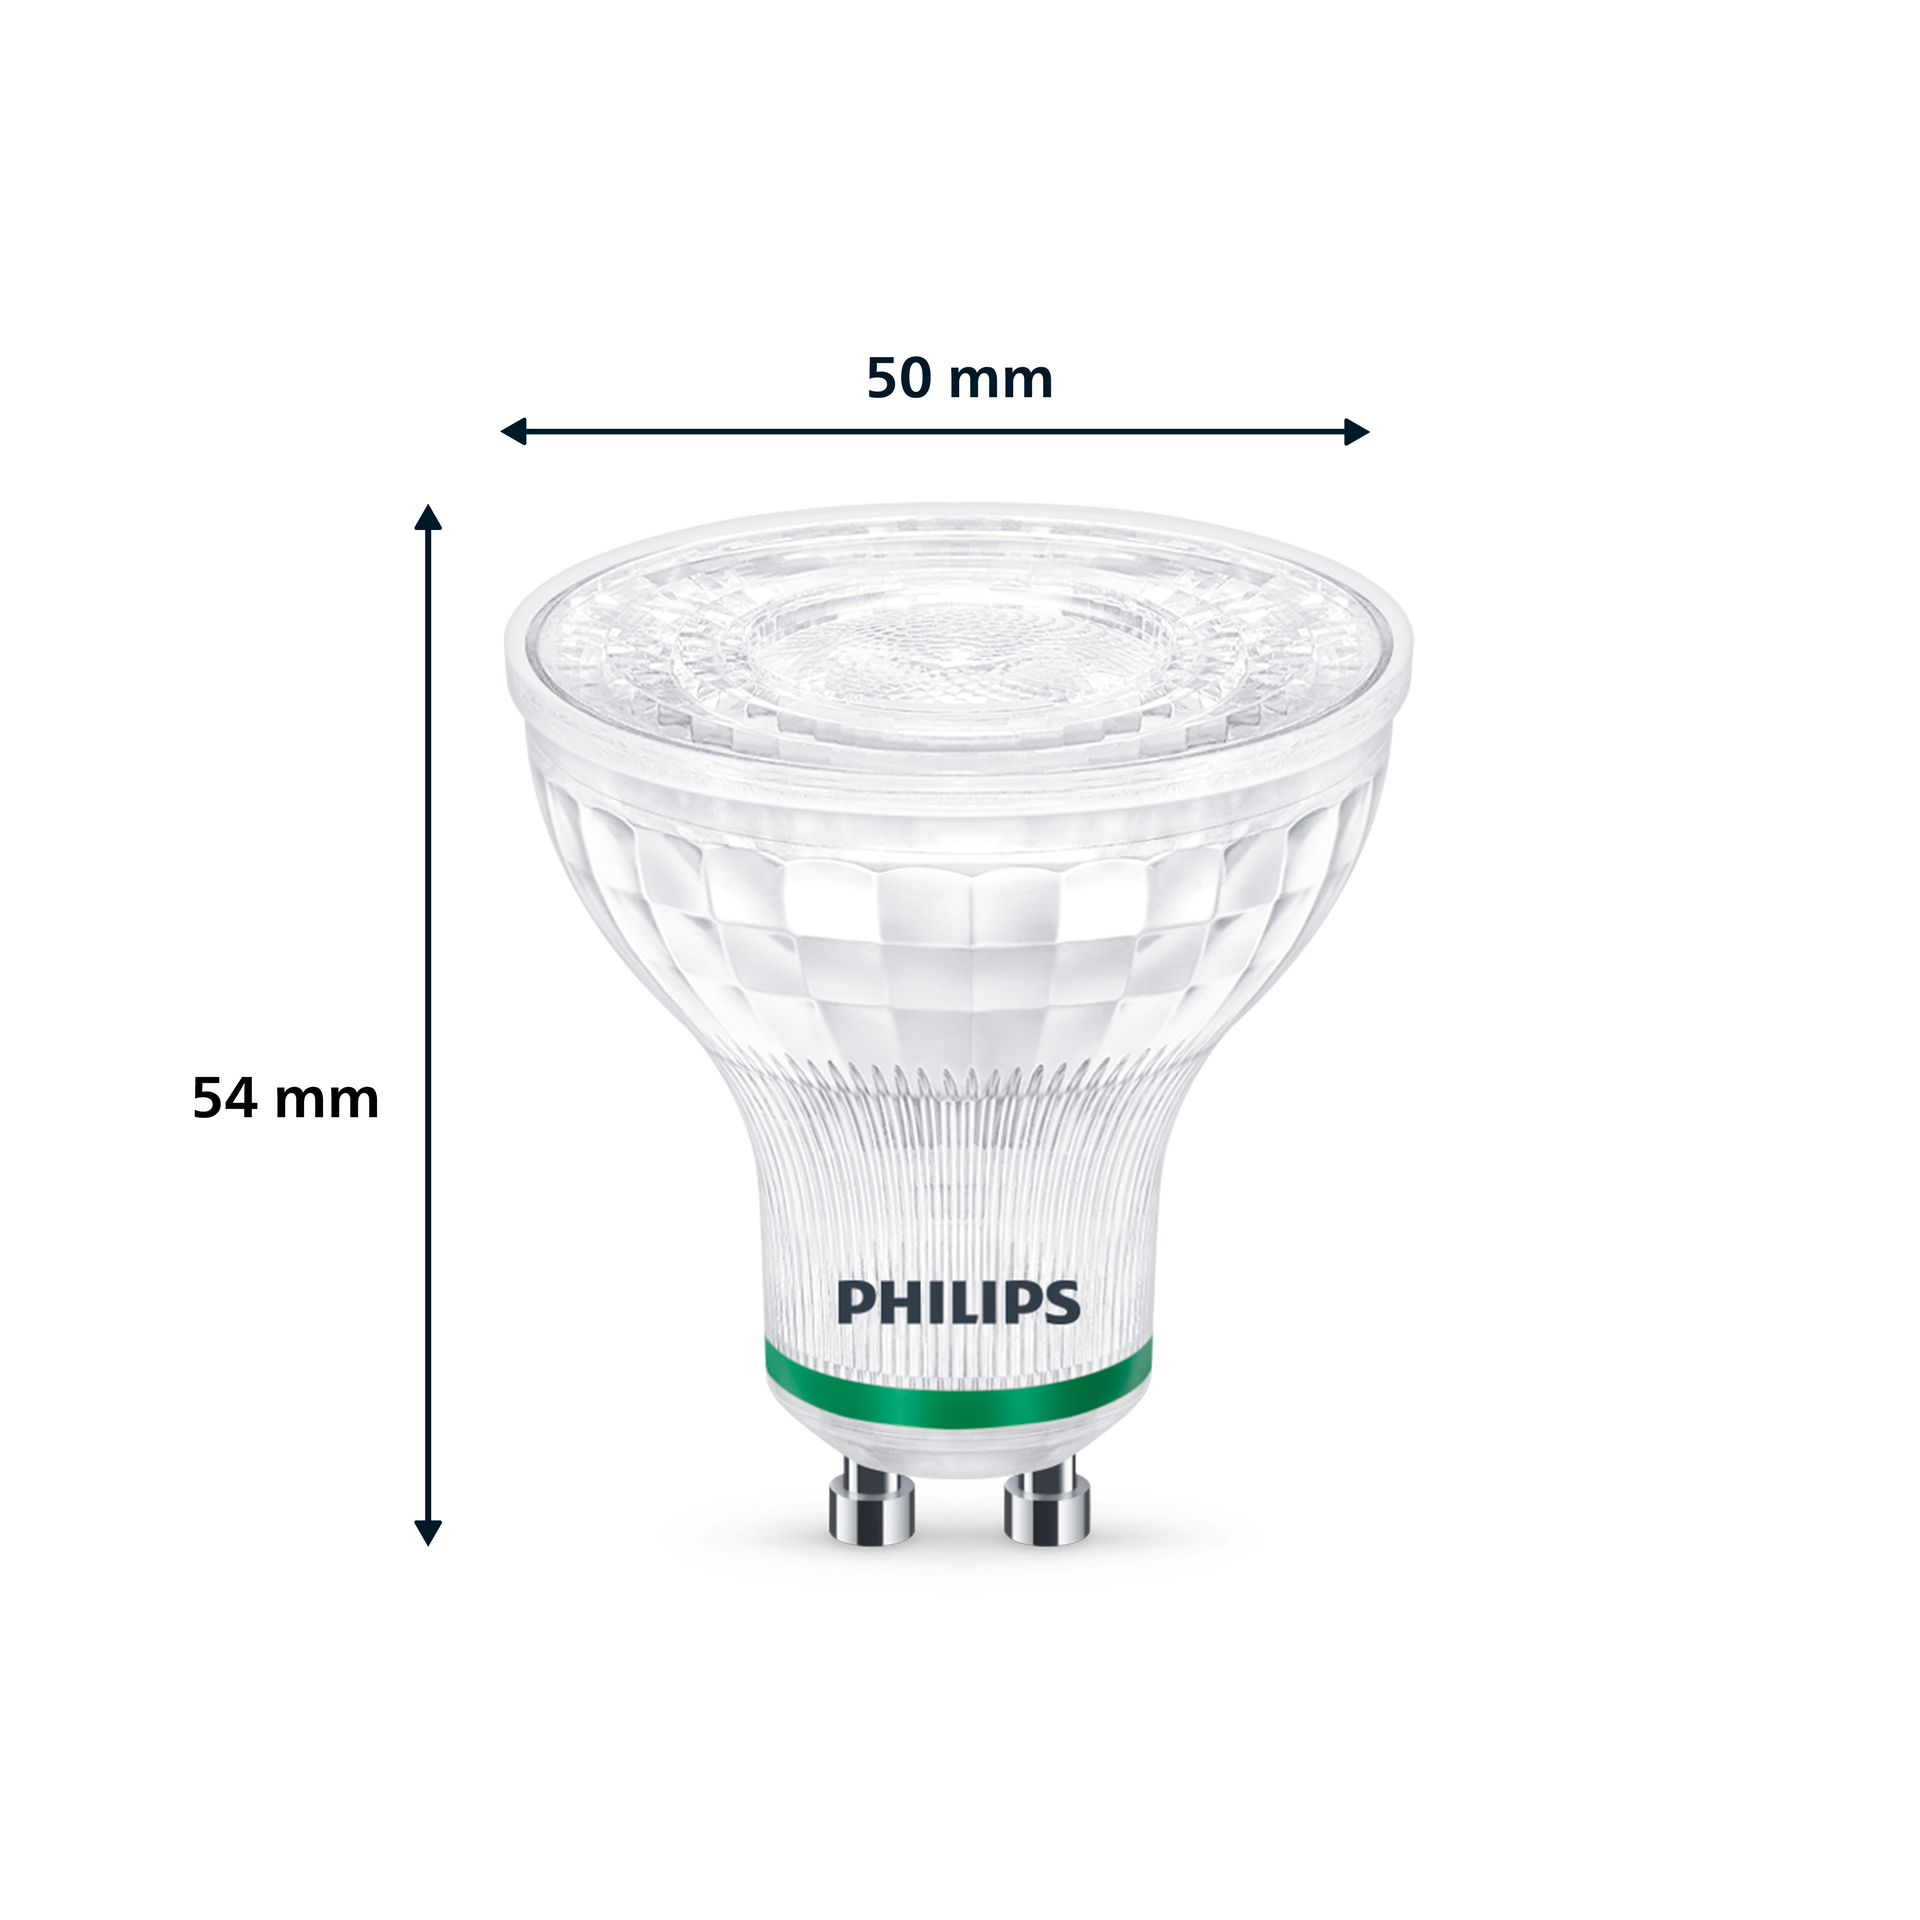 Ledrise - High Performance Led Lighting Philips LED Spot 2.4-50W